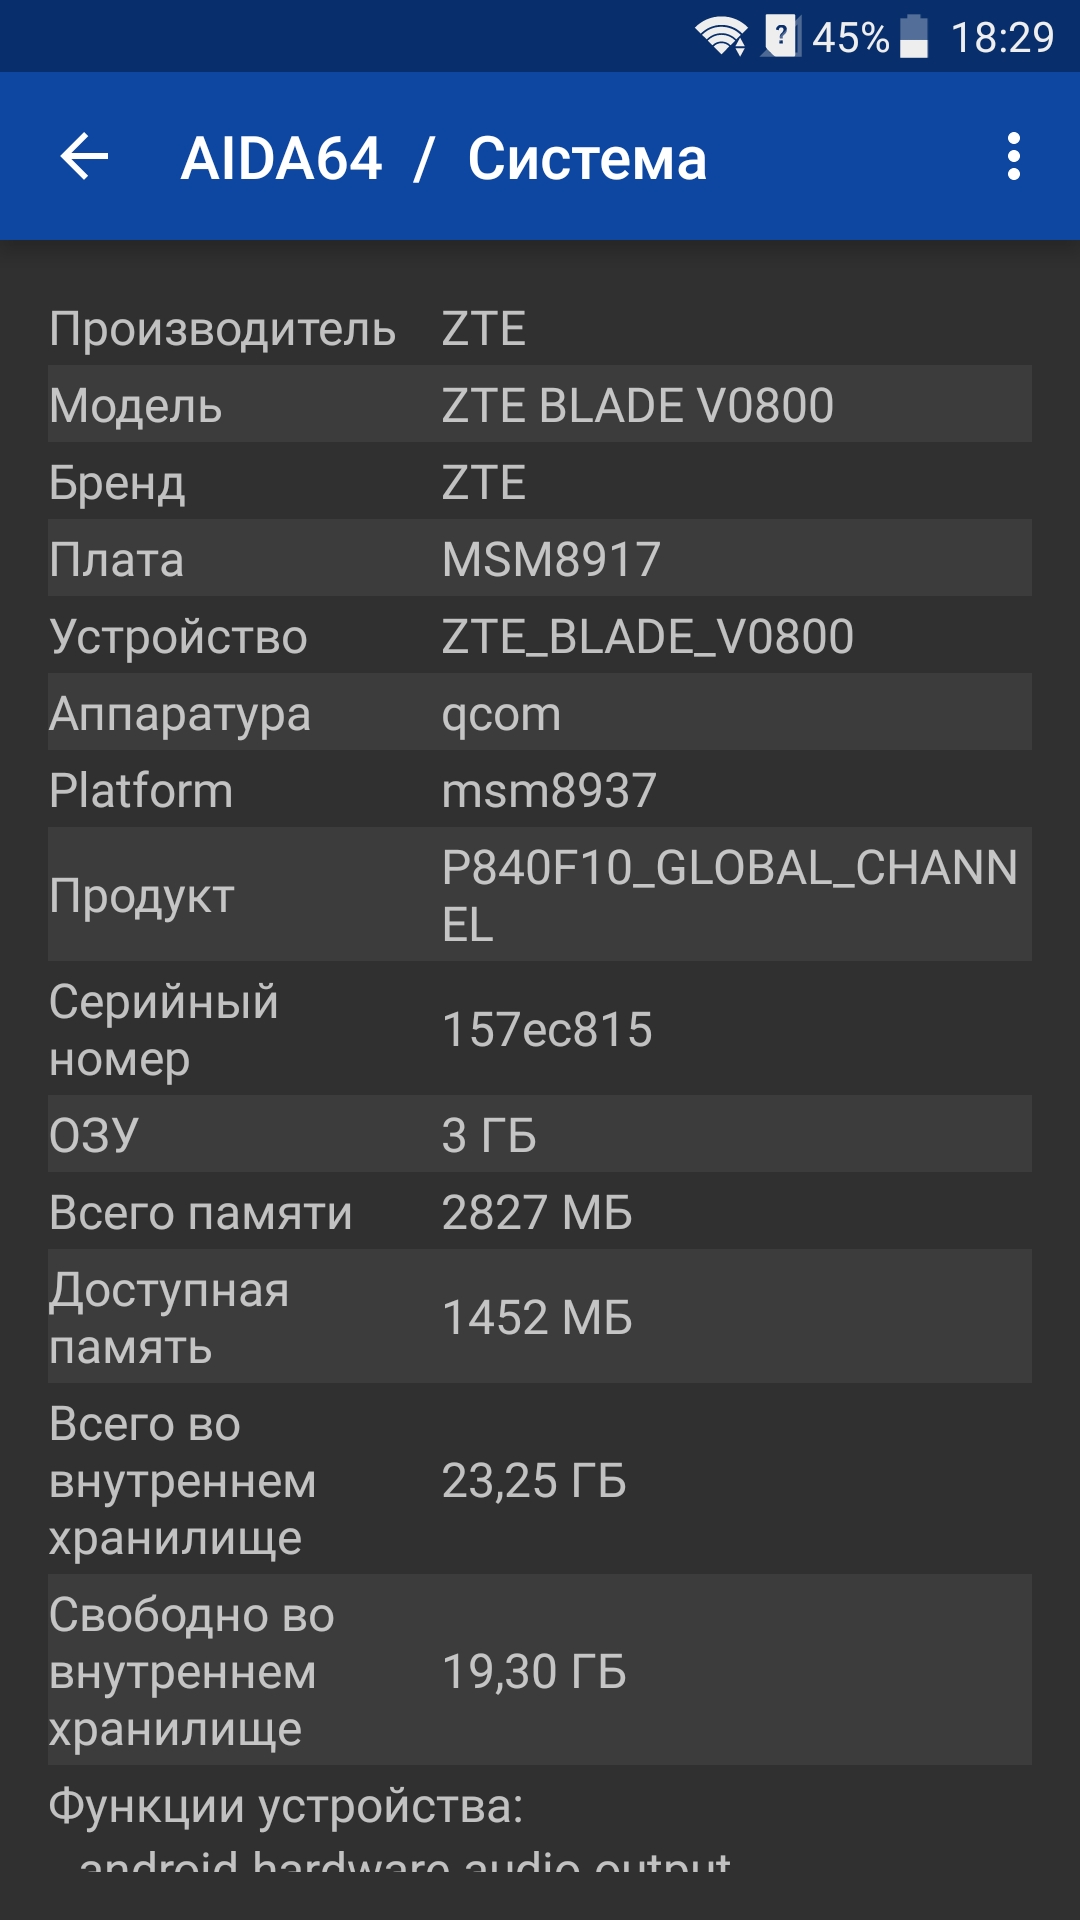 Blade v8 mini: подробный обзор характеристик смартфона от zte (+отзывы)